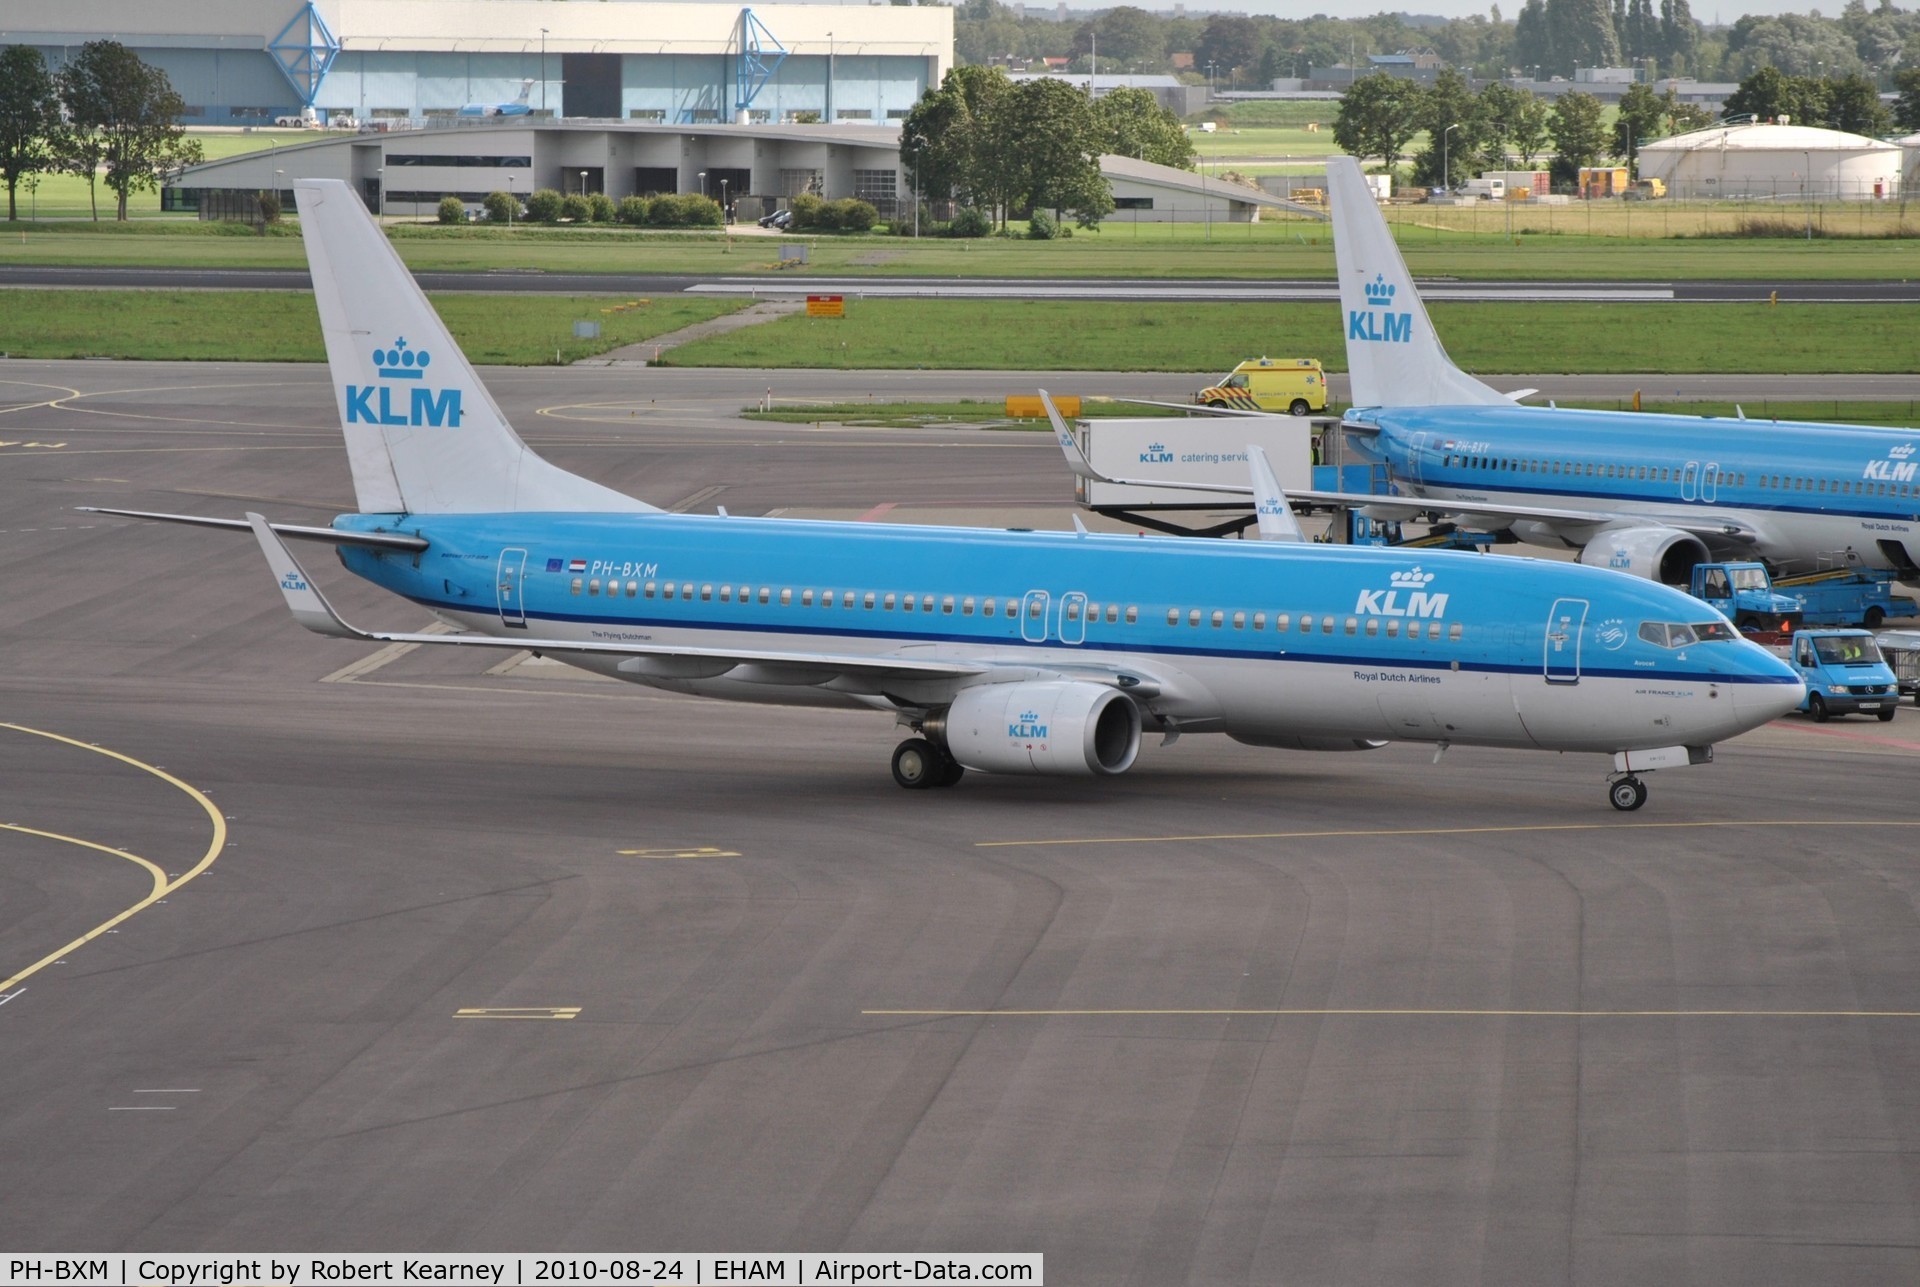 PH-BXM, 2000 Boeing 737-8K2 C/N 30355, KLM making it's final turn onto stand